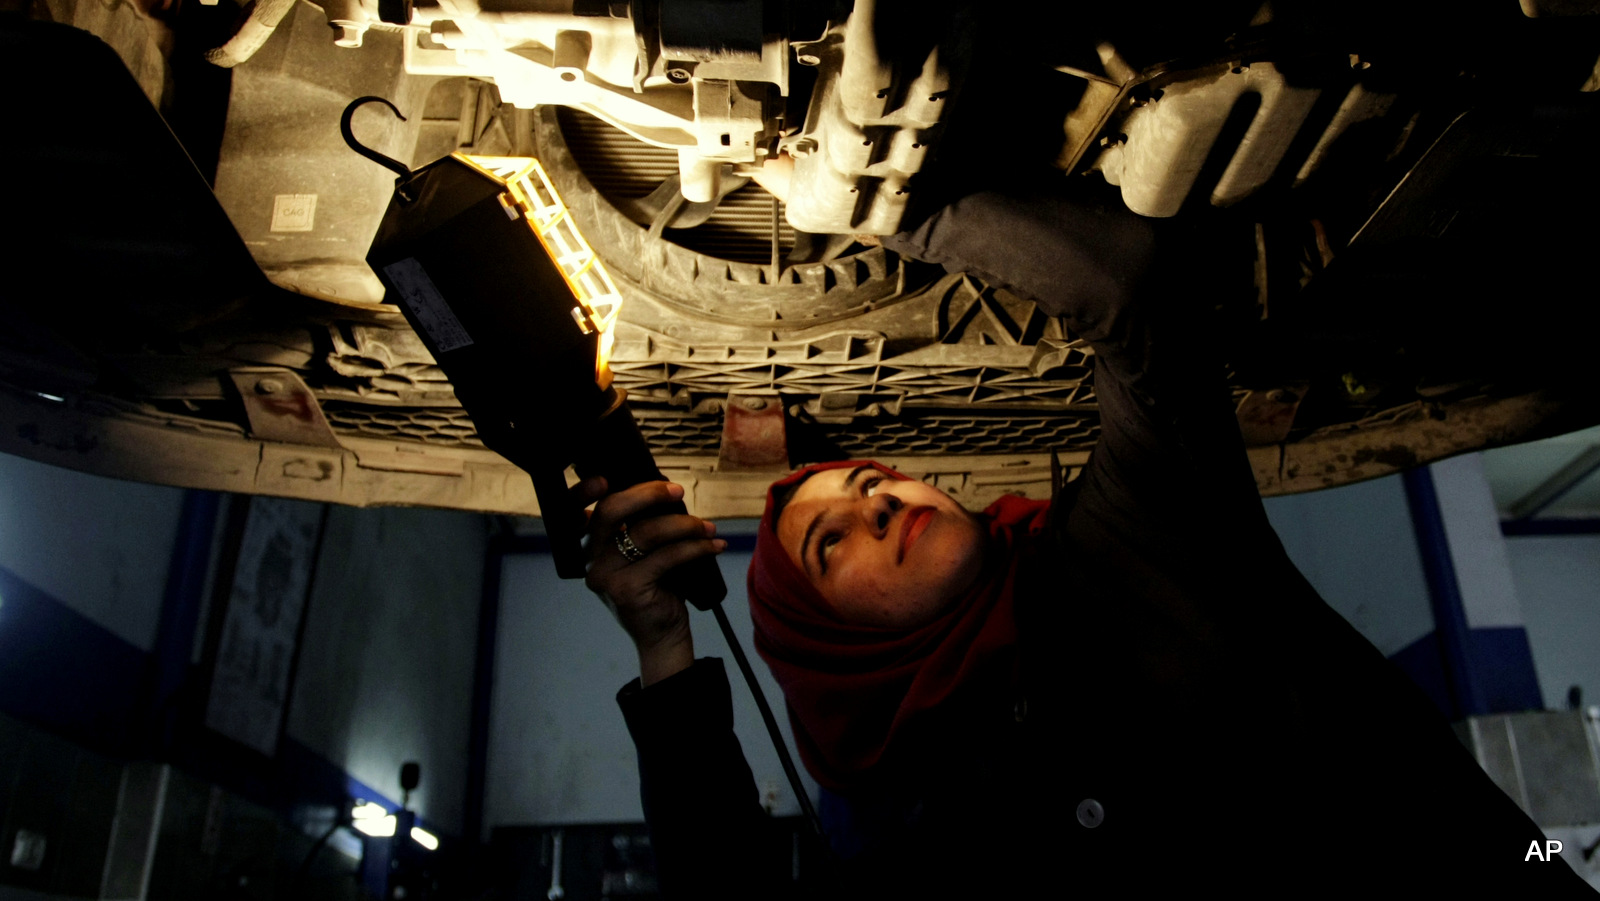 Palestinian auto mechanic Nagham Dweikat checks the bottom of a vehicle at a repair shop